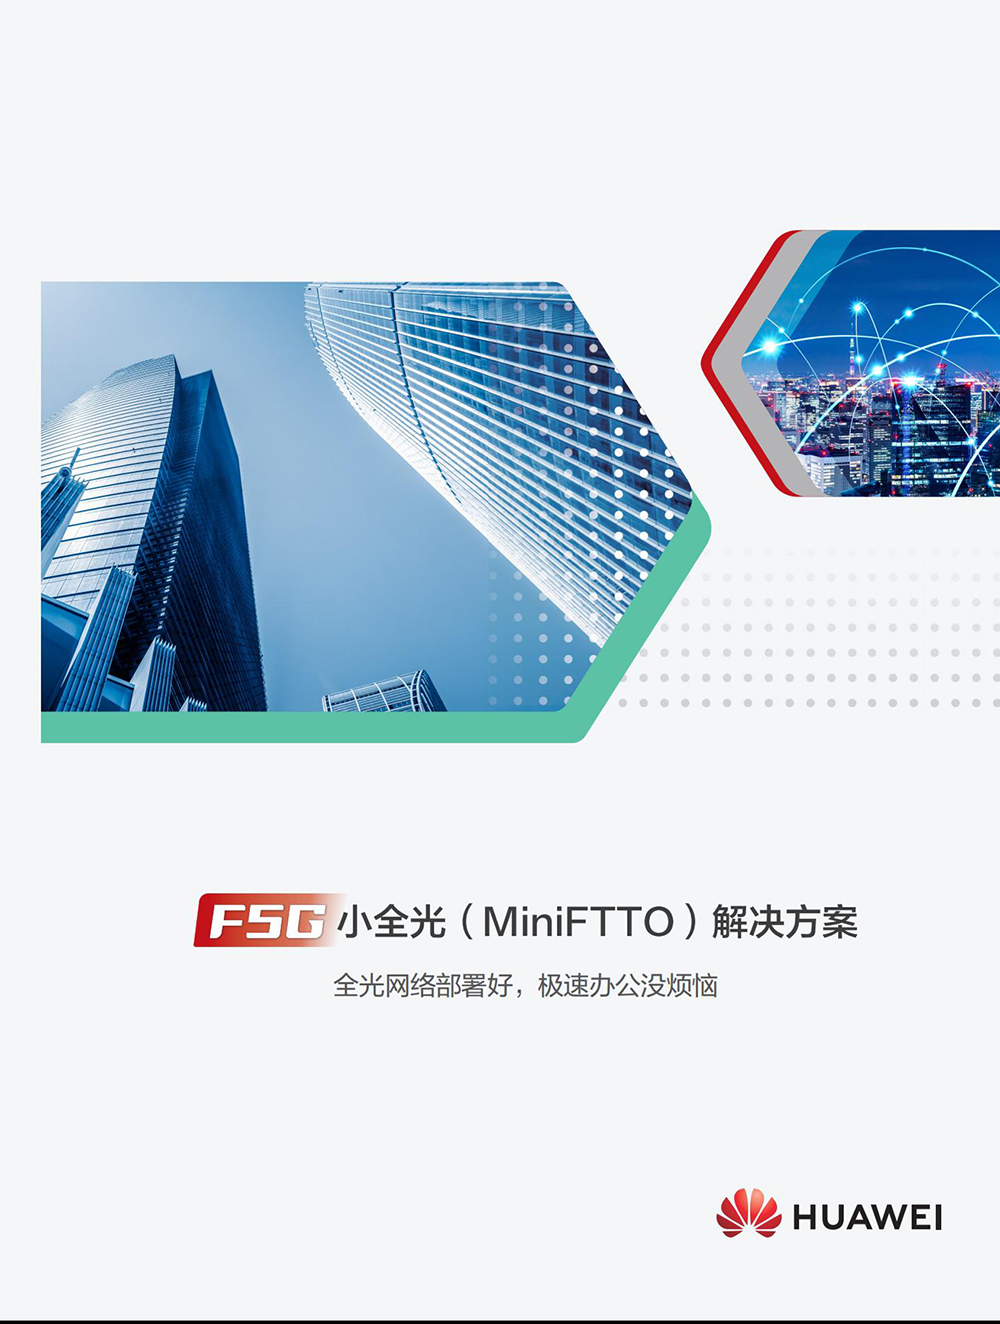 F5G小全光(MiniFTTO)解决方案-V4.0 (20230427)_00.png